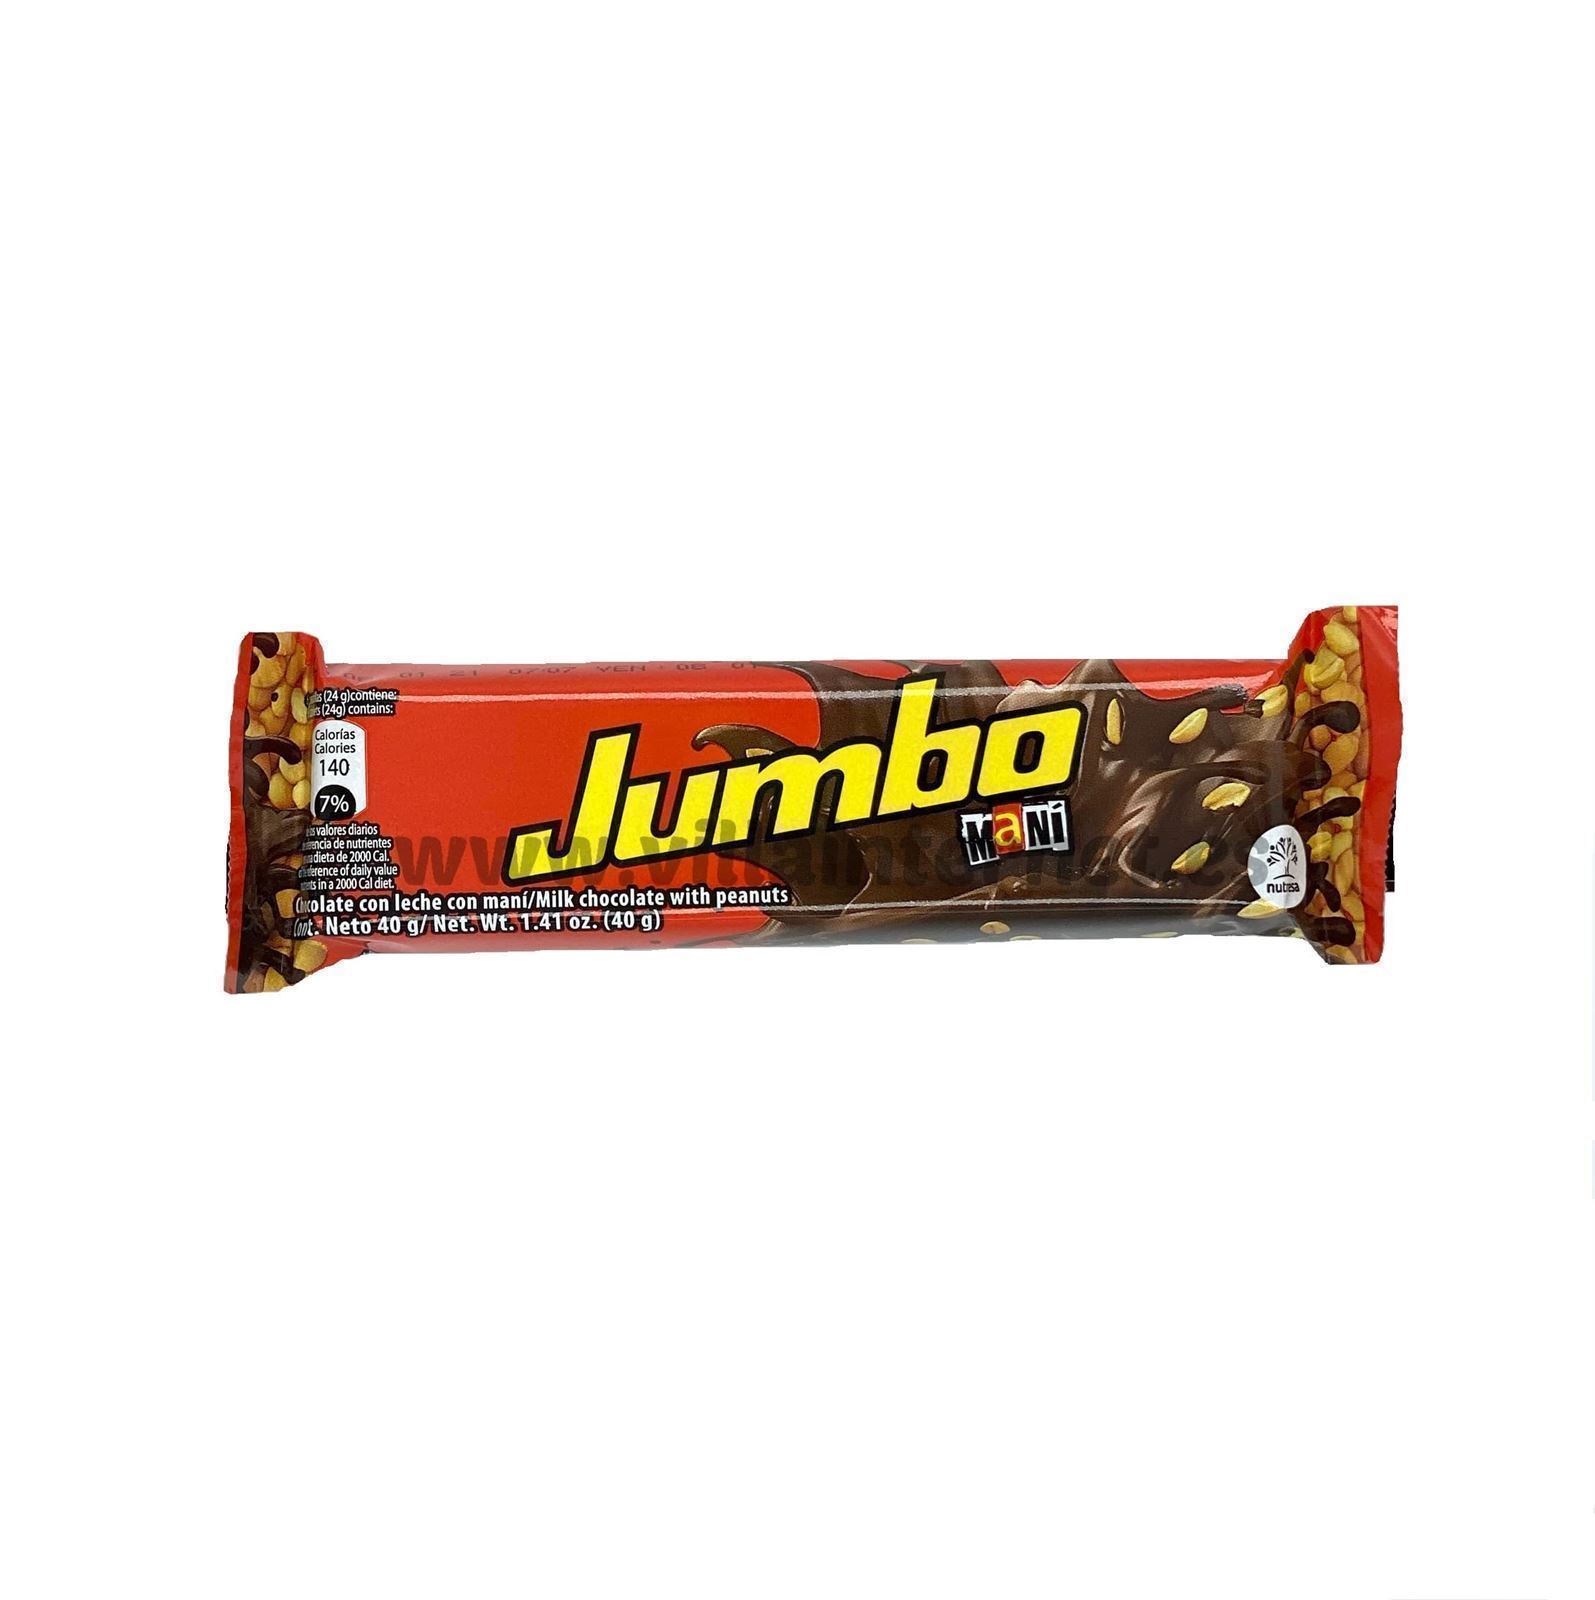 Chocolate Jumbo maní 40g - Imagen 1